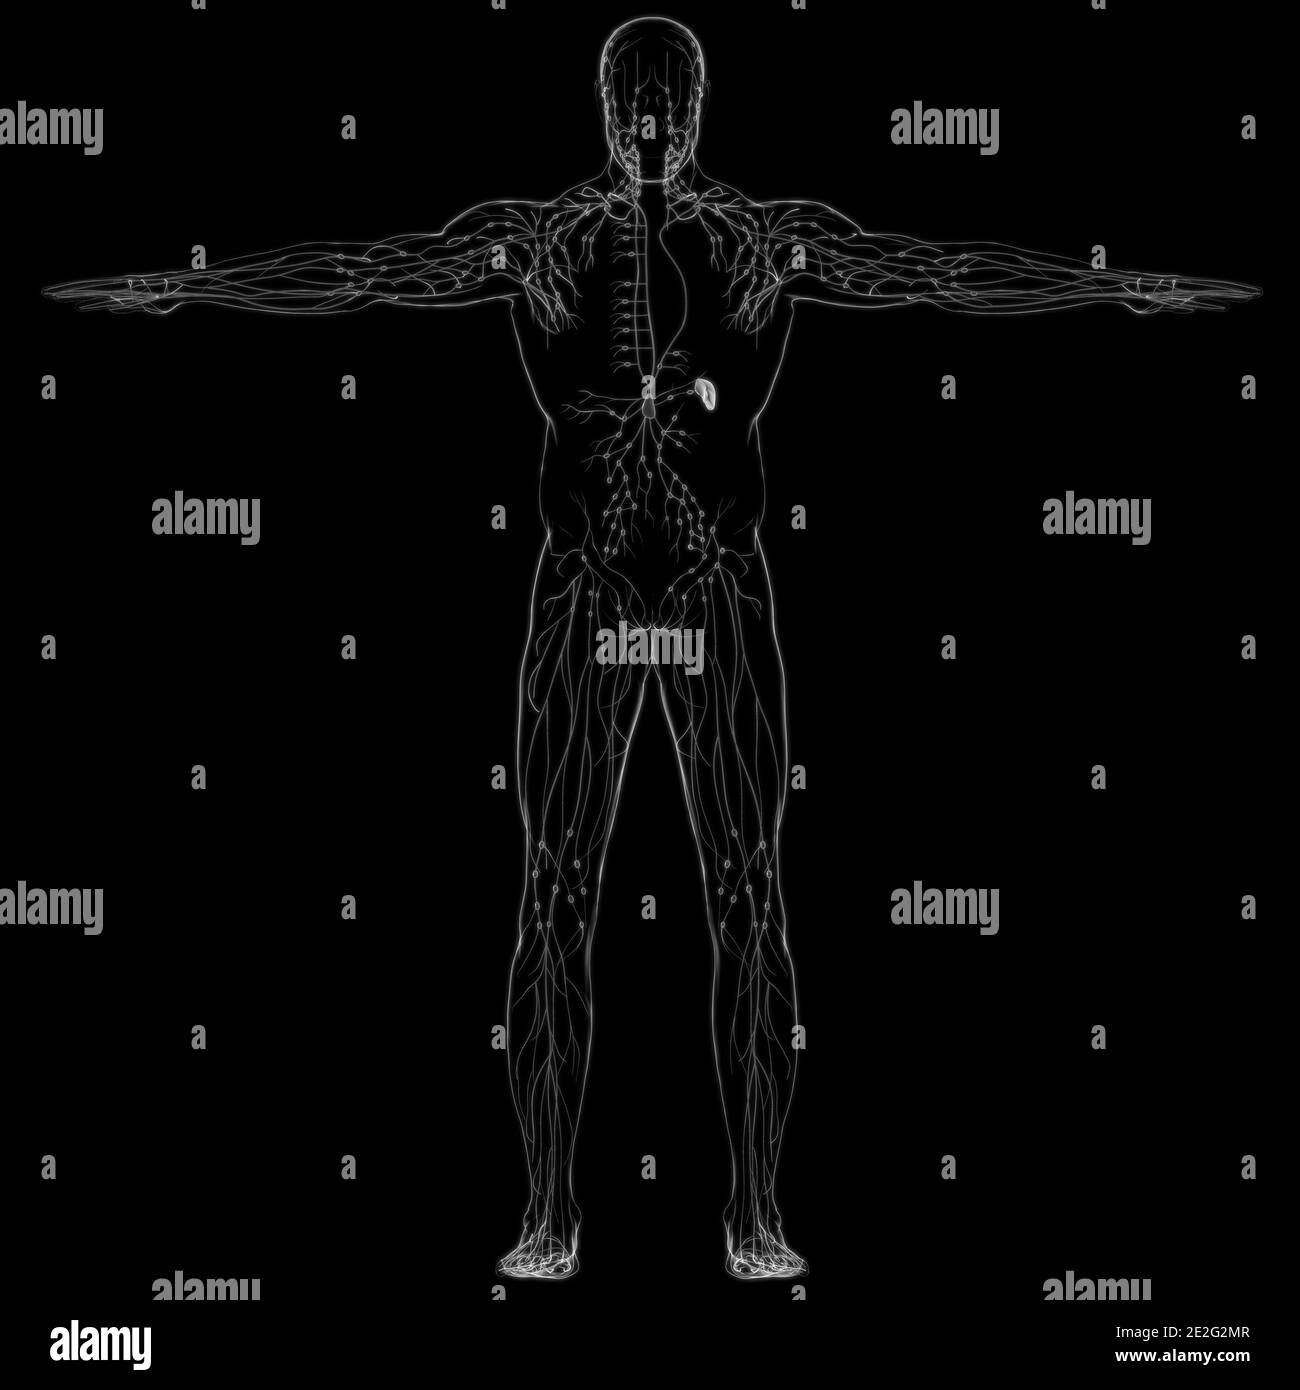 Human lymphe Nodes Anatomy for Medical concept 3D Illustration Banque D'Images